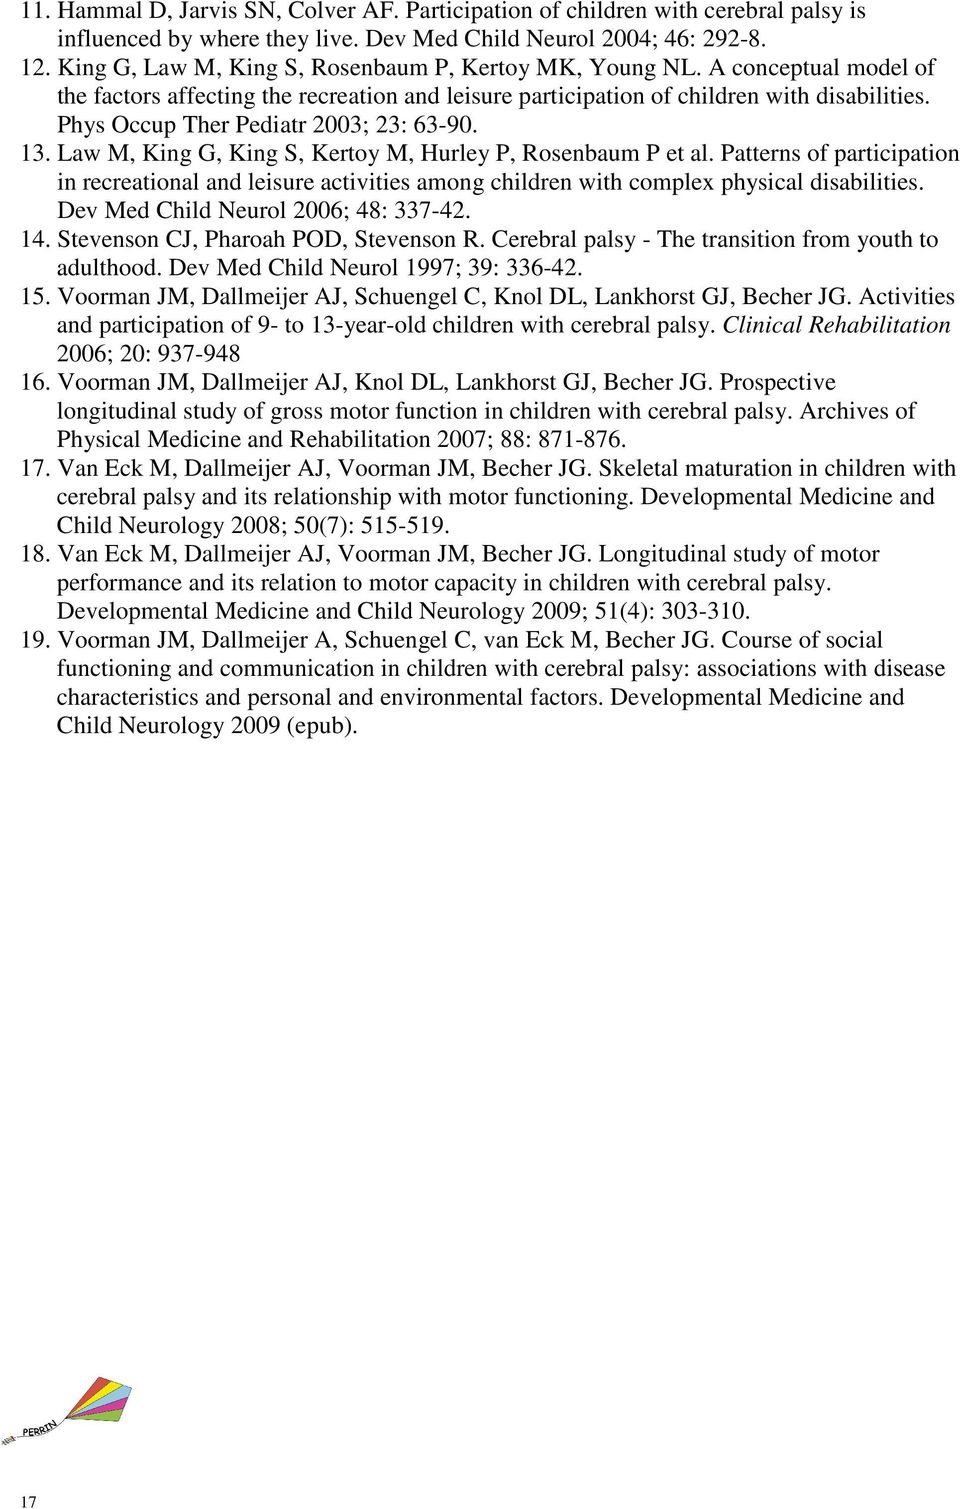 Phys Occup Ther Pediatr 2003; 23: 63-90. 13. Law M, King G, King S, Kertoy M, Hurley P, Rosenbaum P et al.